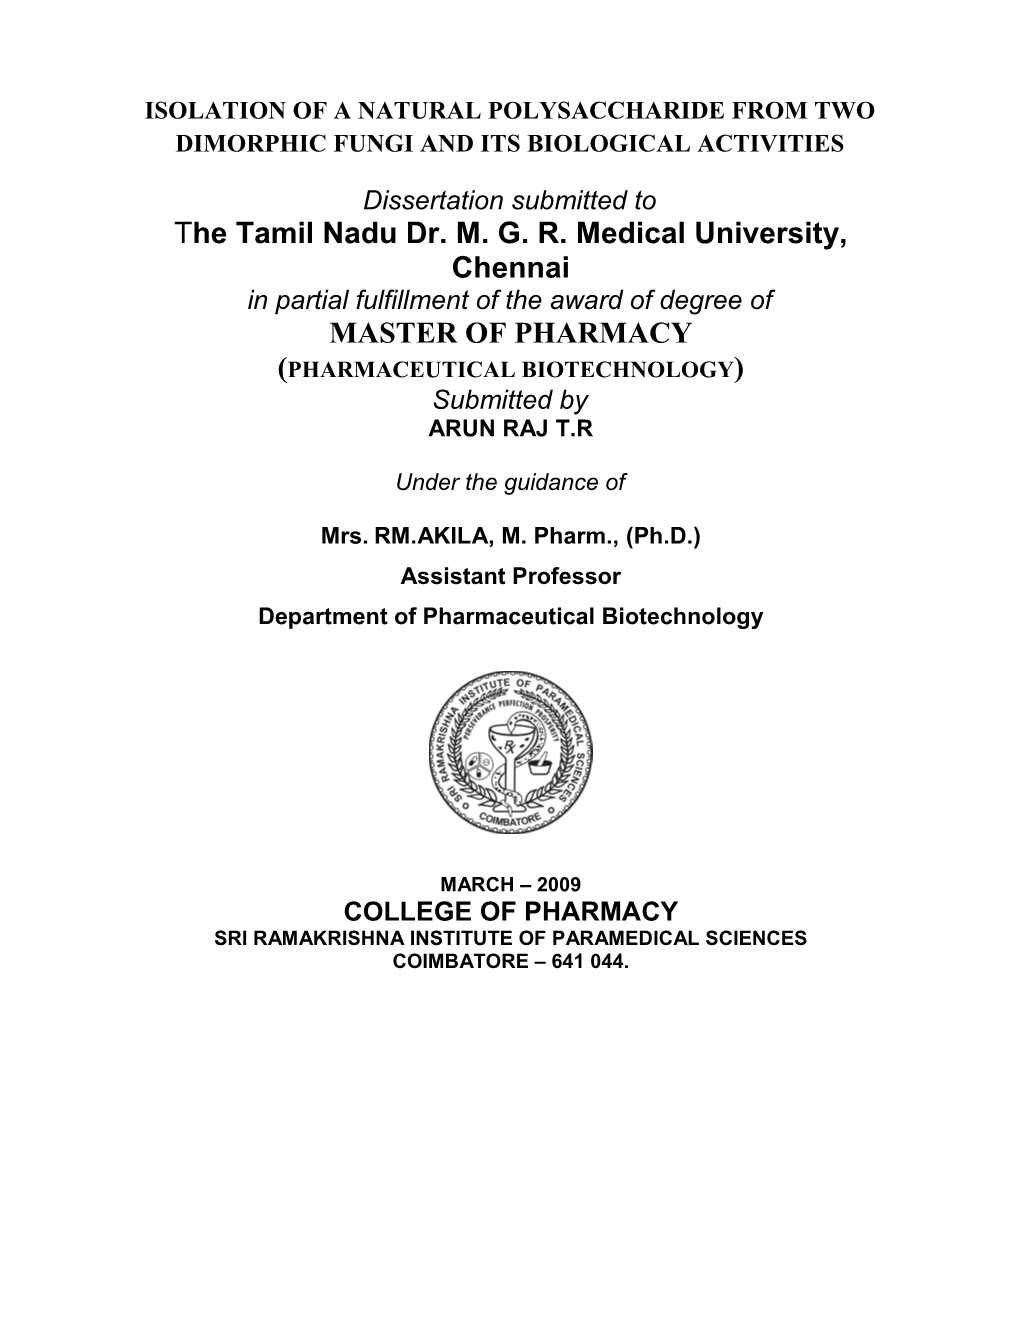 The Tamil Nadu Dr. M. G. R. Medical University, Chennai MASTER OF